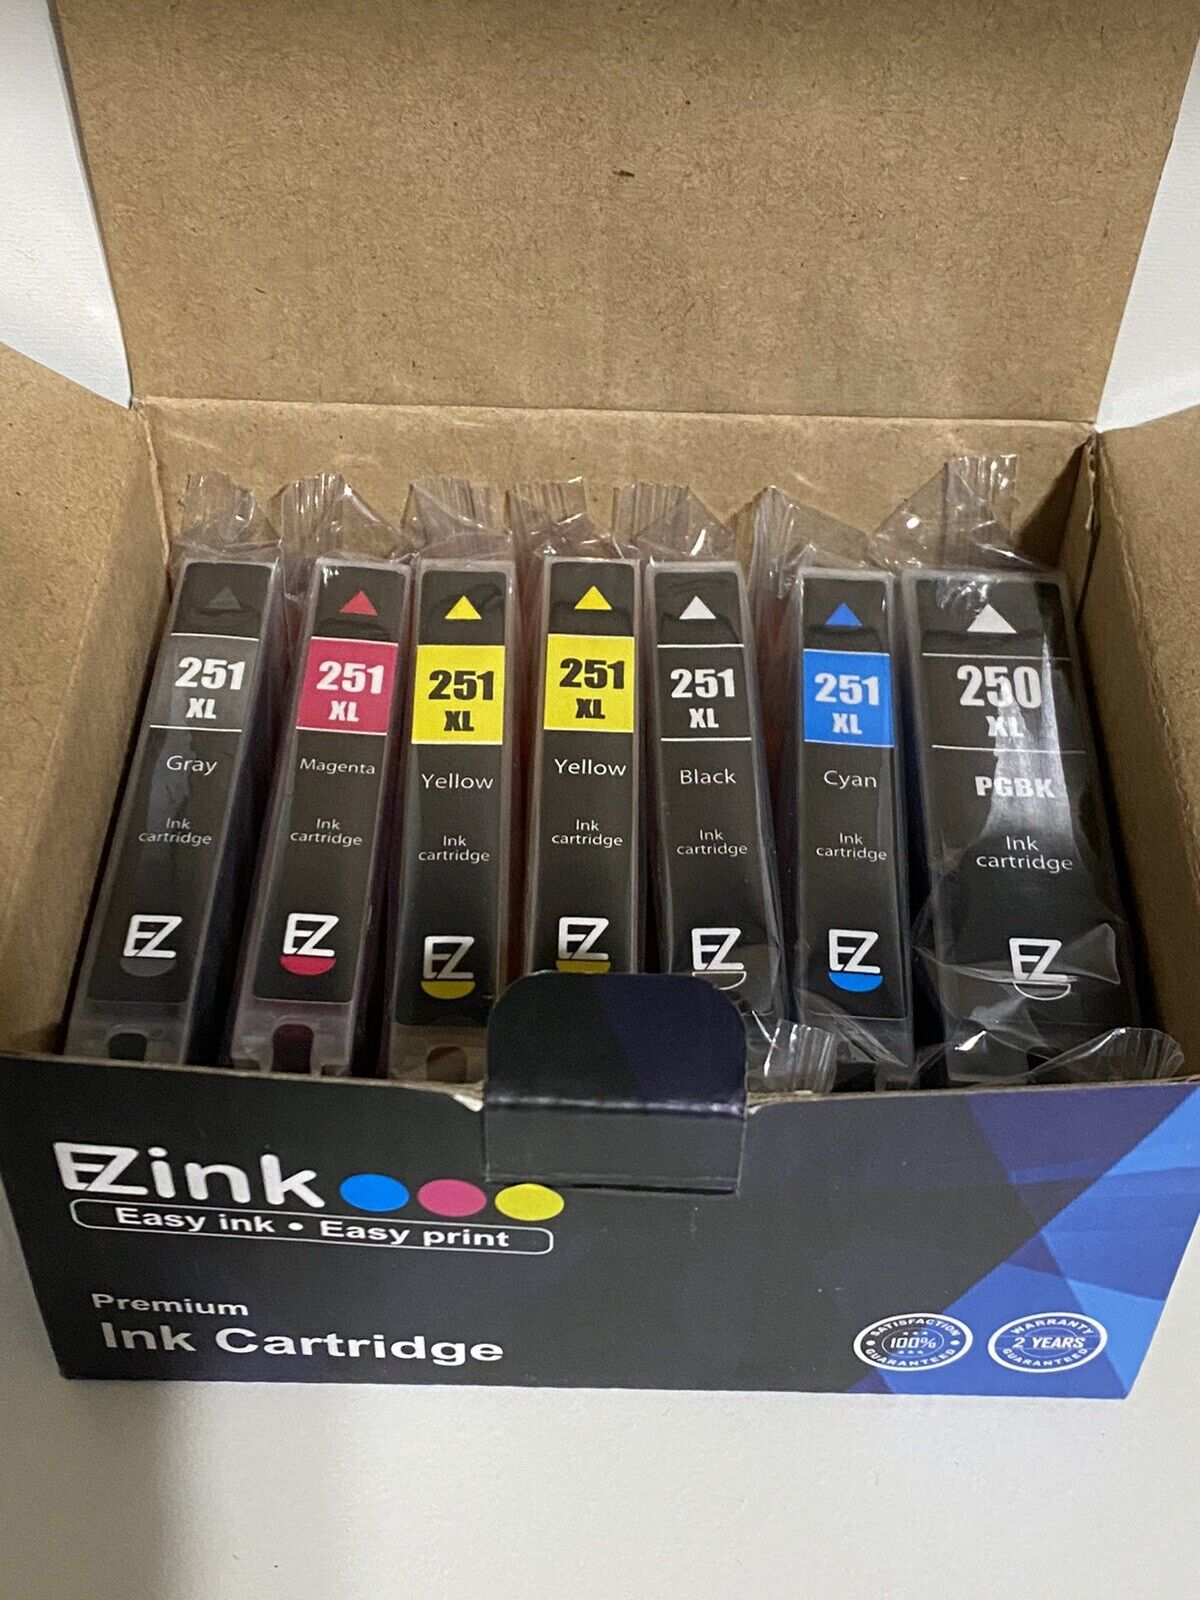 EZ Ink 251 XL New Blk Cyan Yel Ink Cartridge's Expired (05/28/22) 7 Pk Open Box